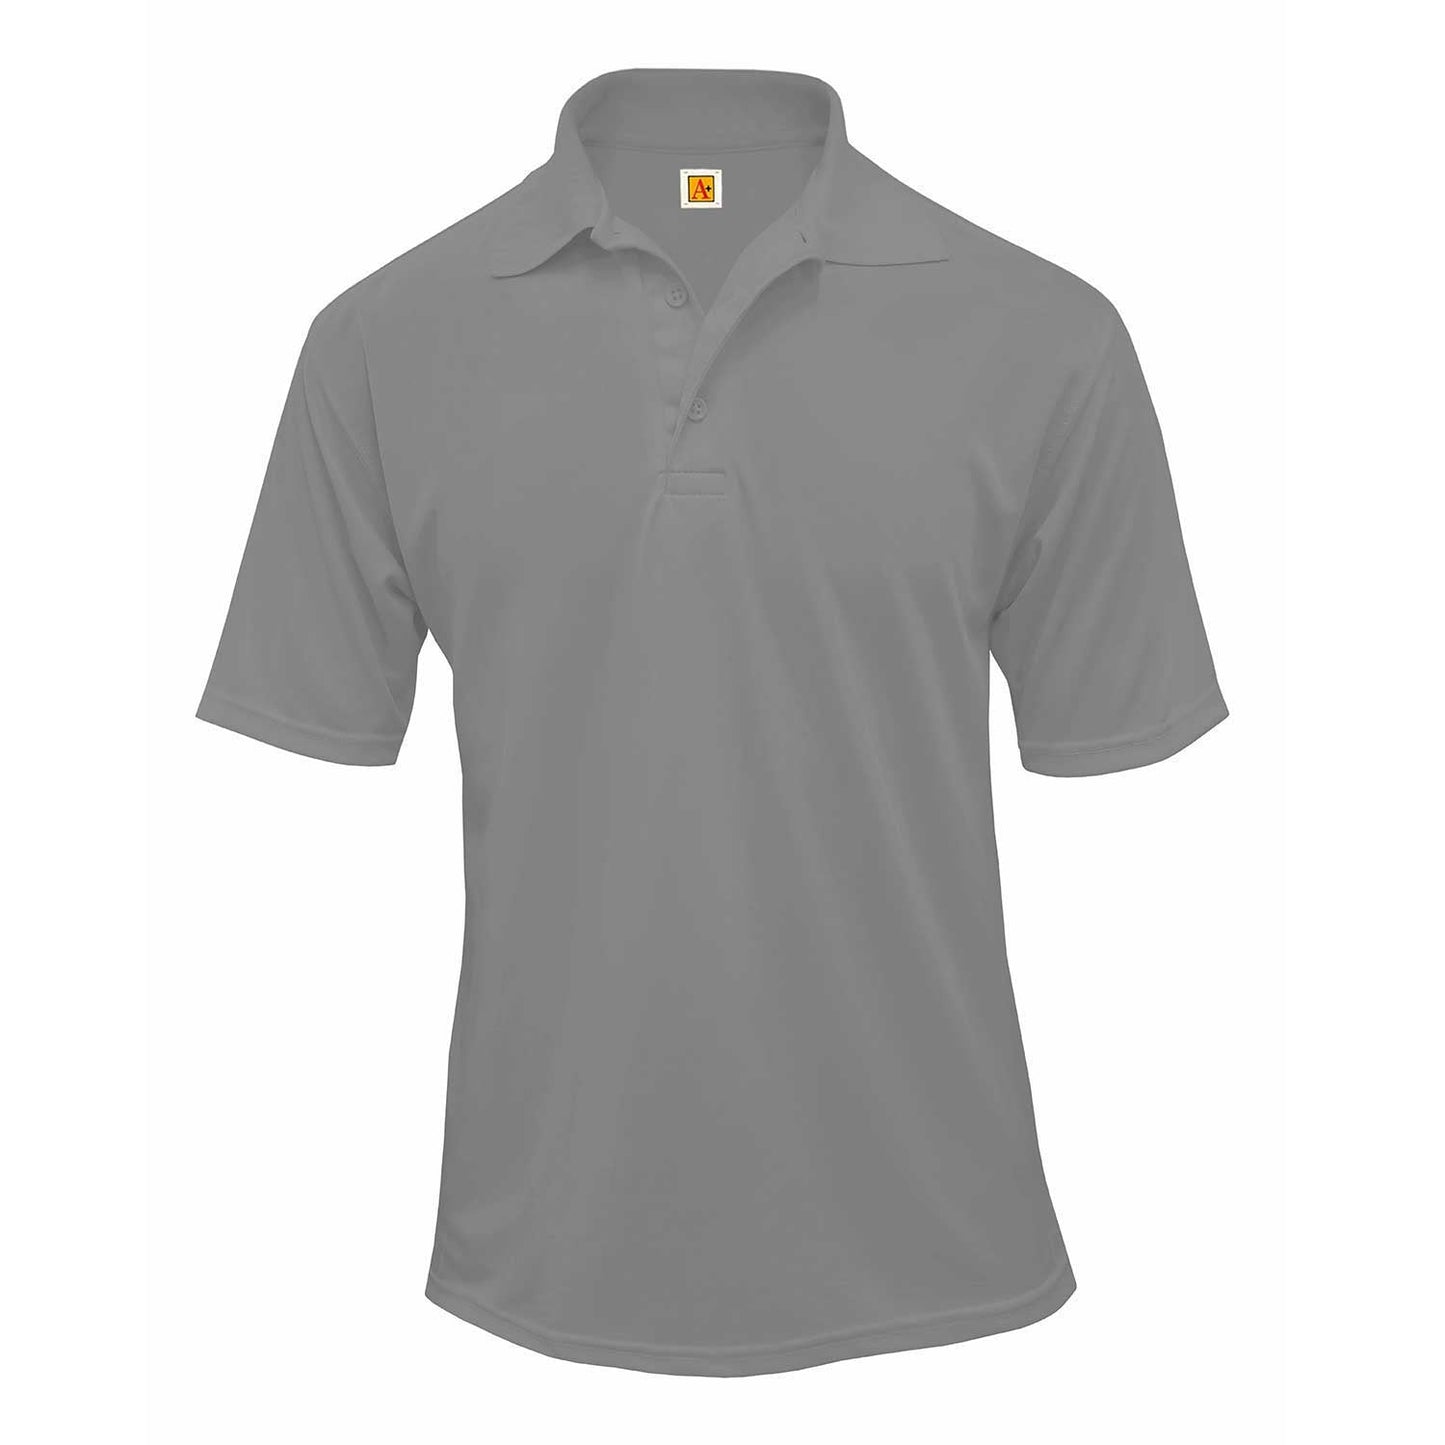 Performance Dri-fit Jersey Knit Short Sleeve Shirt (Unisex) w/Logo - 1110